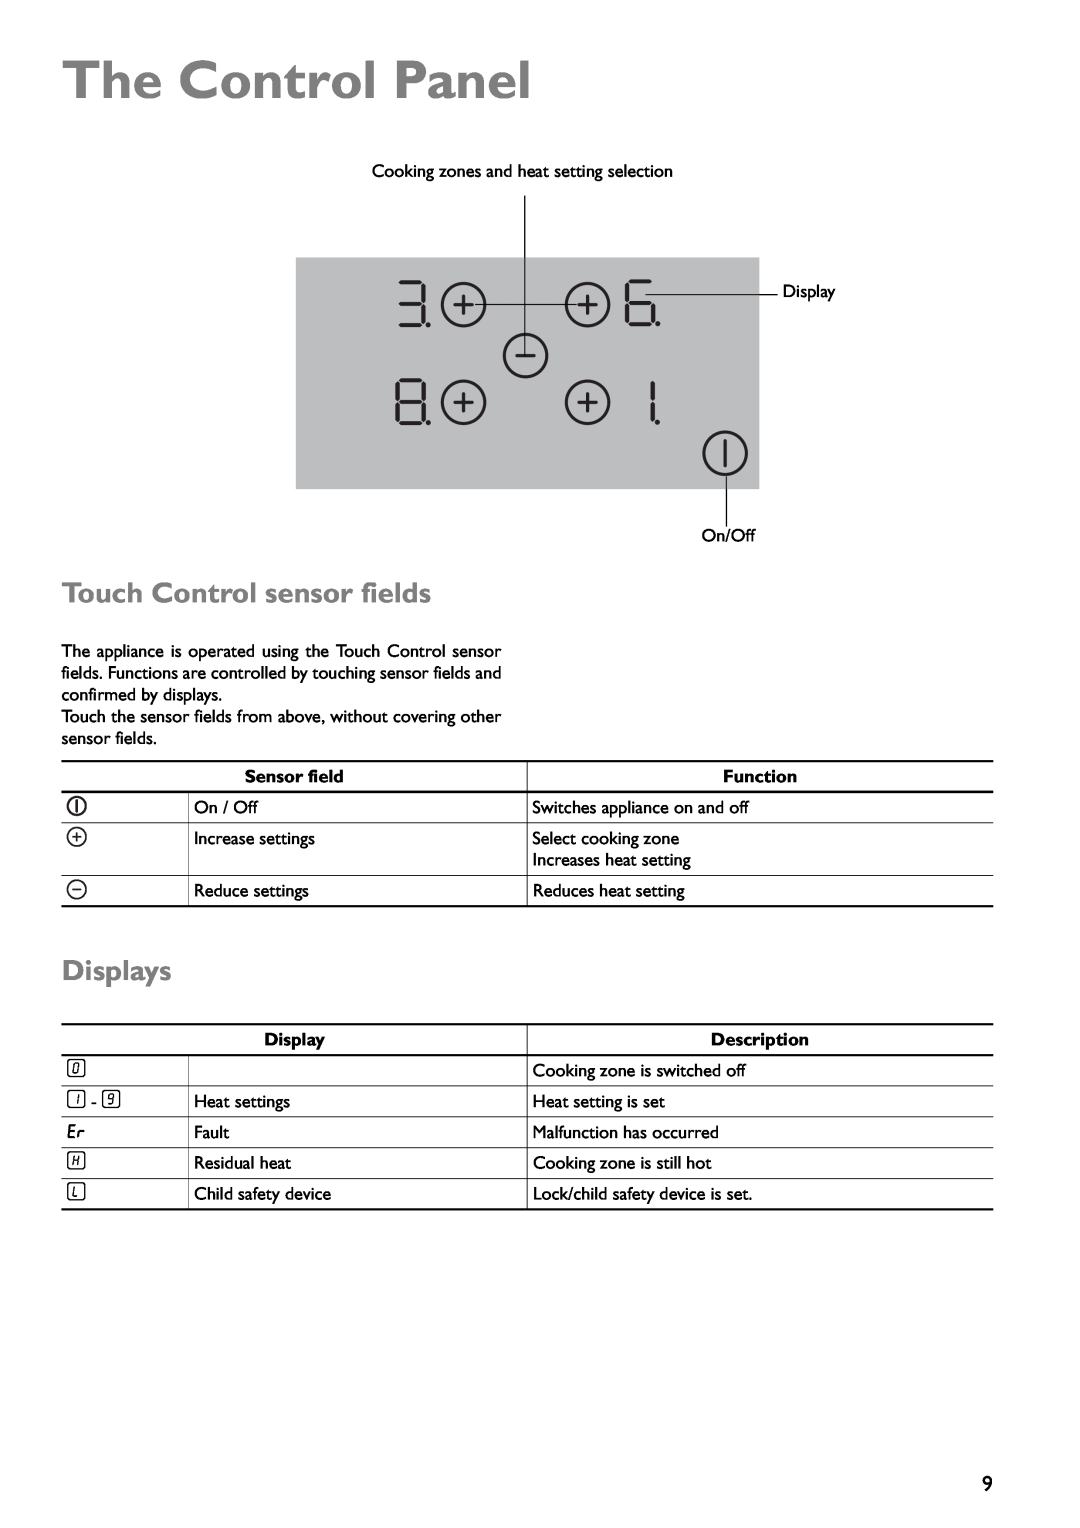 John Lewis JLBICH602 The Control Panel, Touch Control sensor fields, Displays, ¿ - Ç, Sensor field, Function, Description 